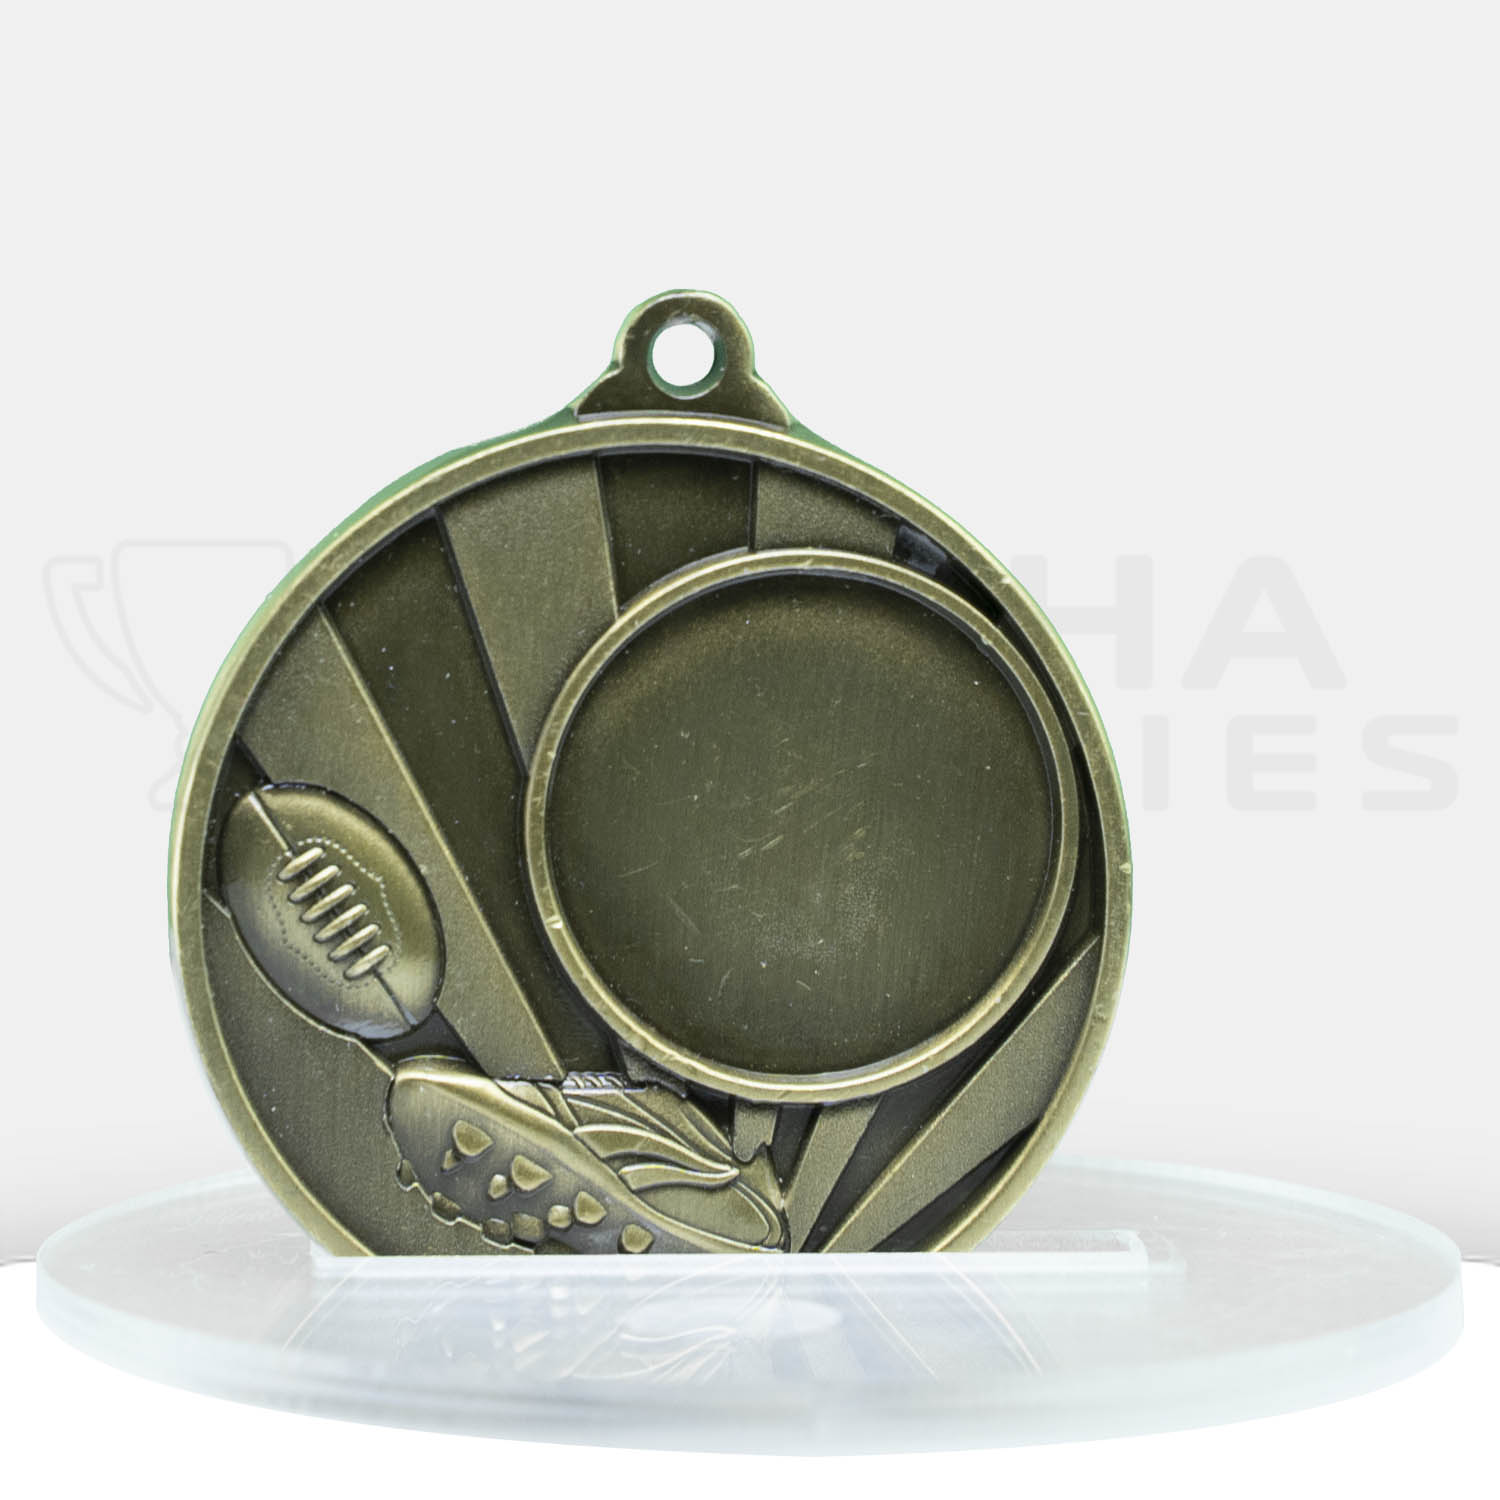 sunrise-medal-aussie-rules25mm-insert-gold-1076c-3g-front